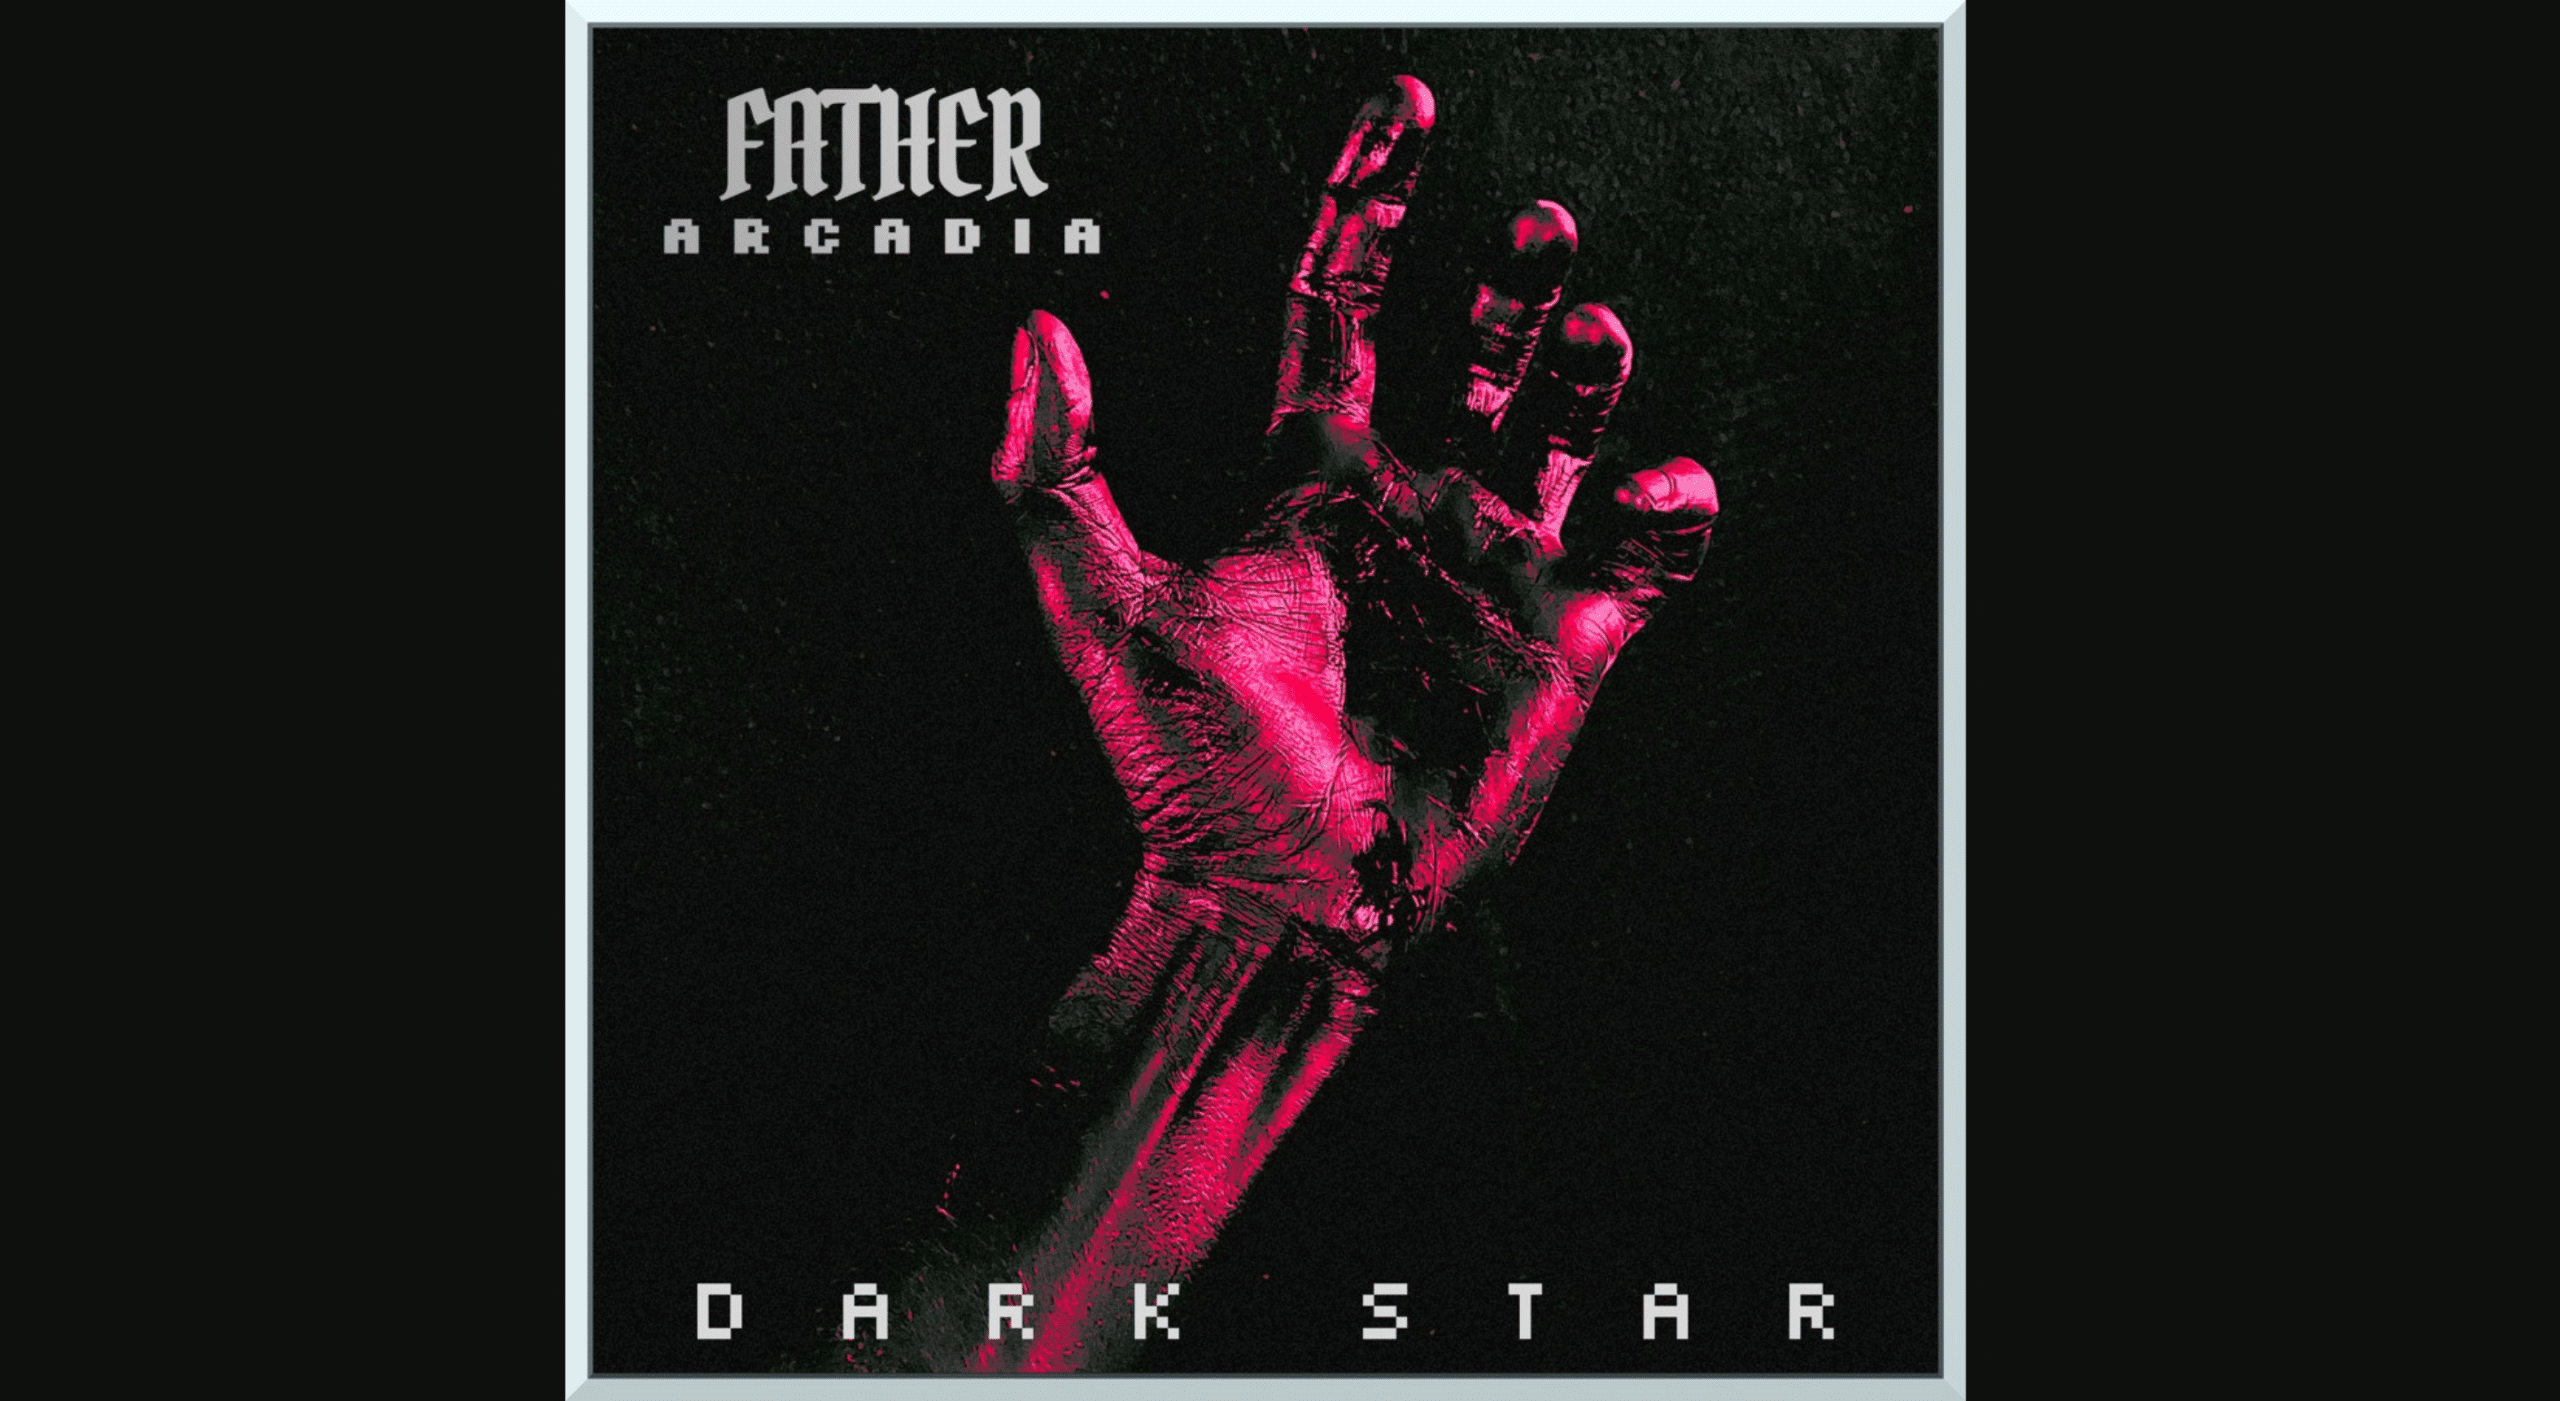 Father Arcadia – Dark Star